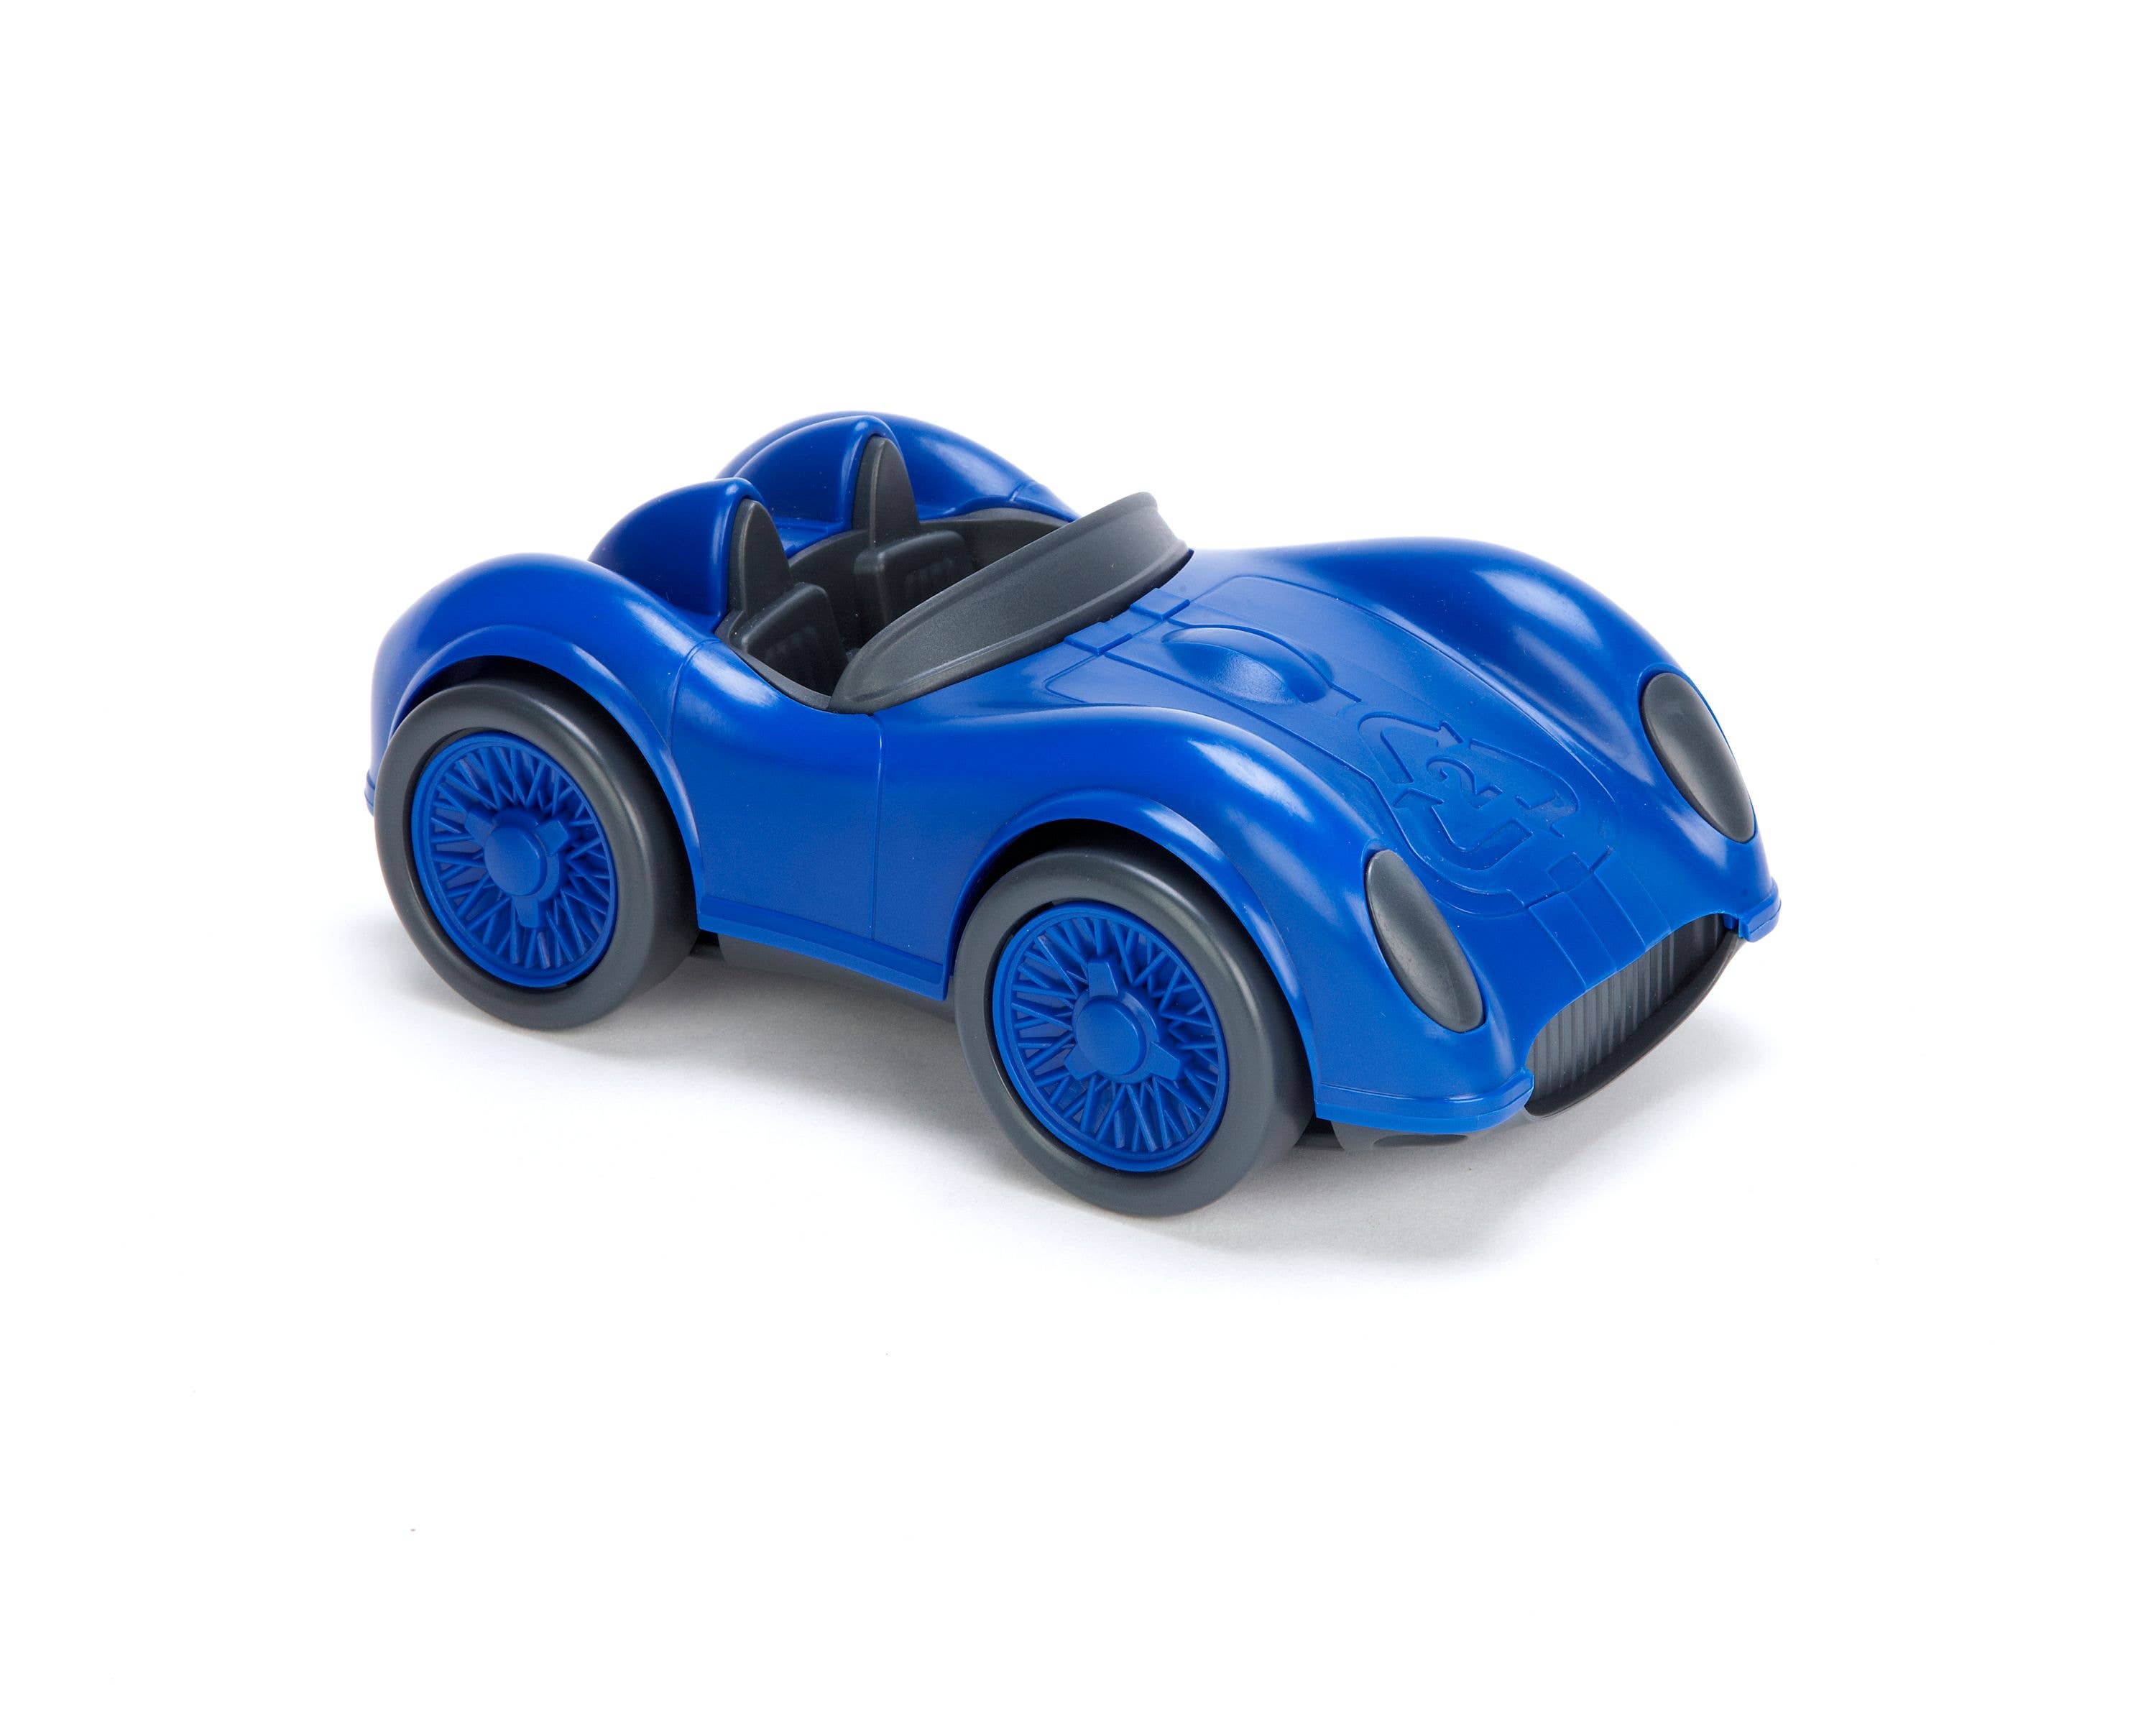 Race Car - Blue